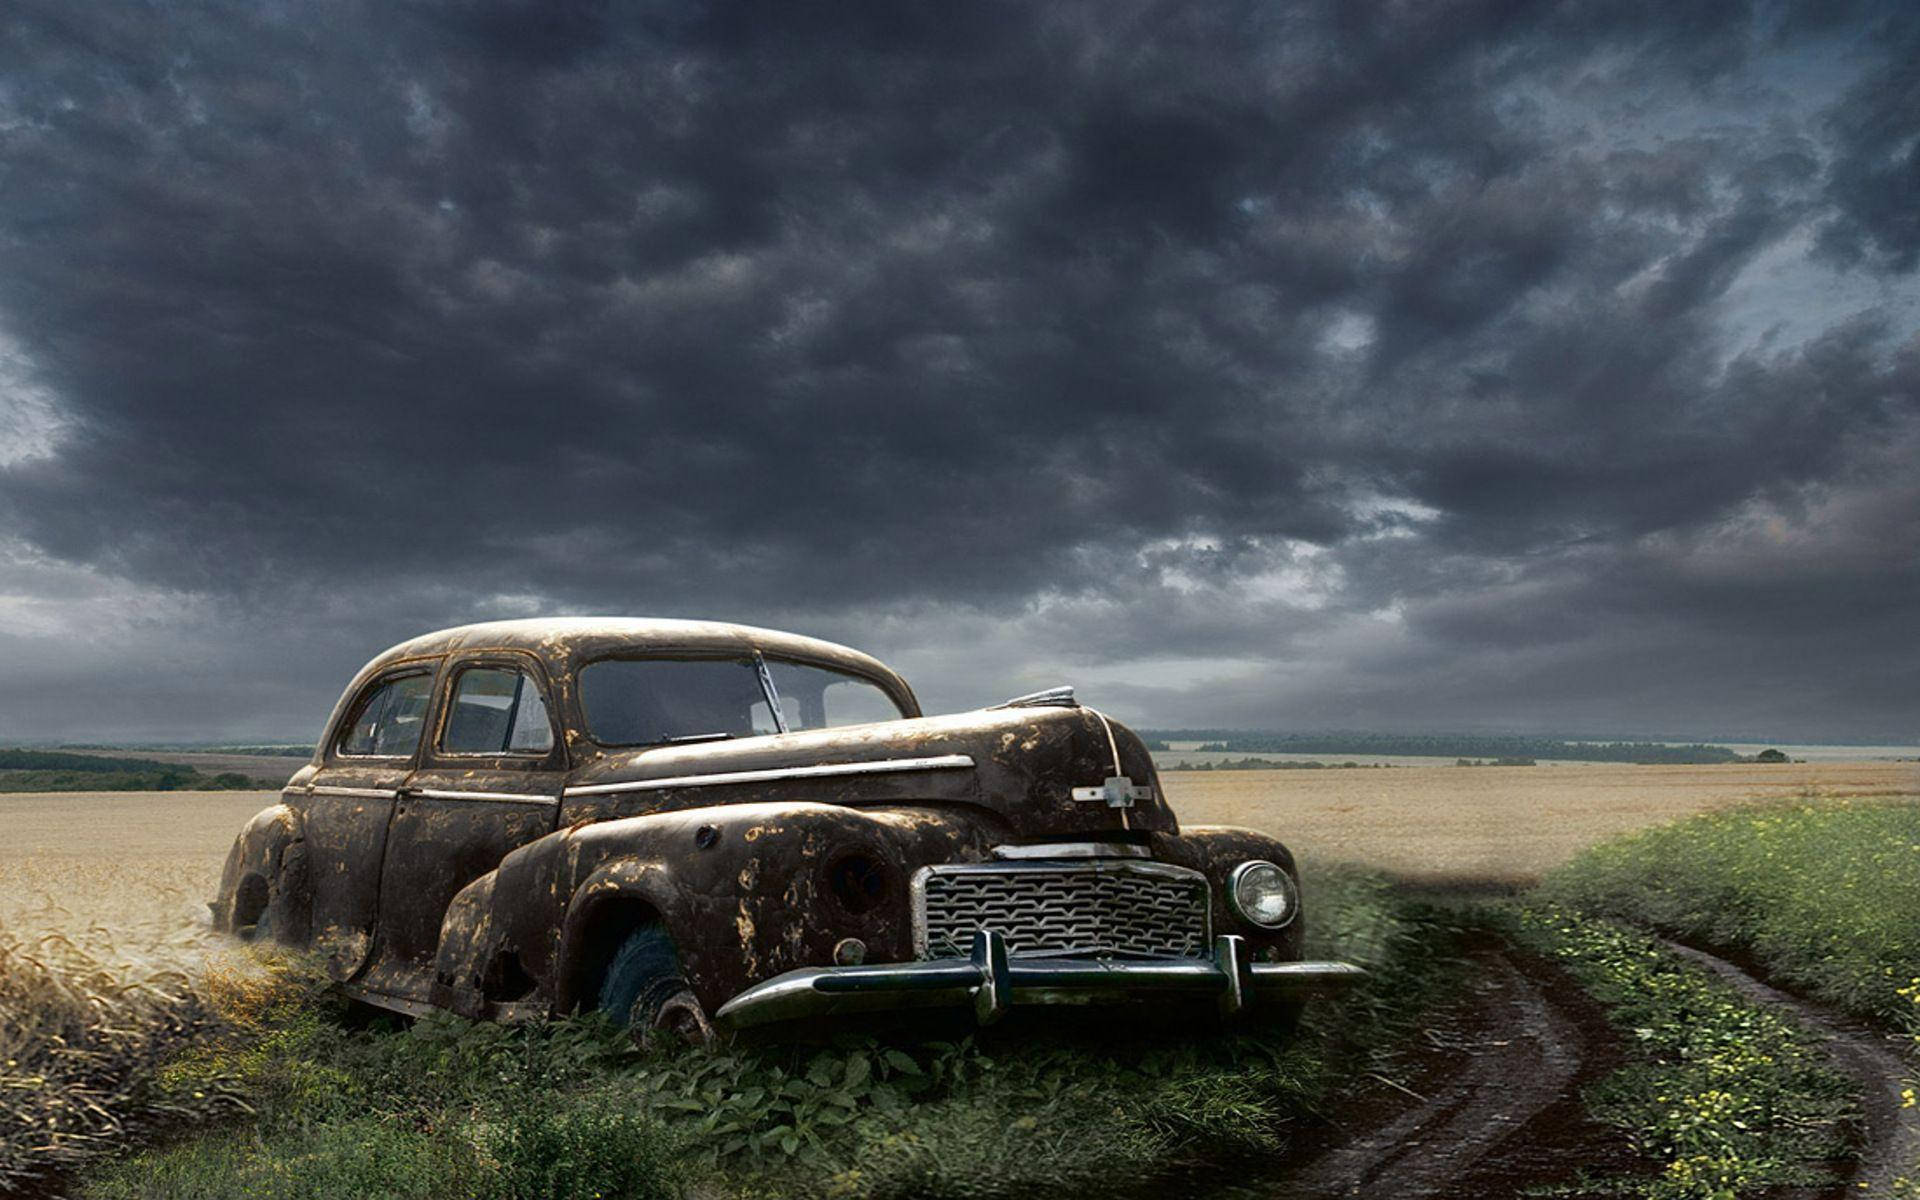 Nostalgic Remnant: Abandoned Old Car in Field Wallpaper